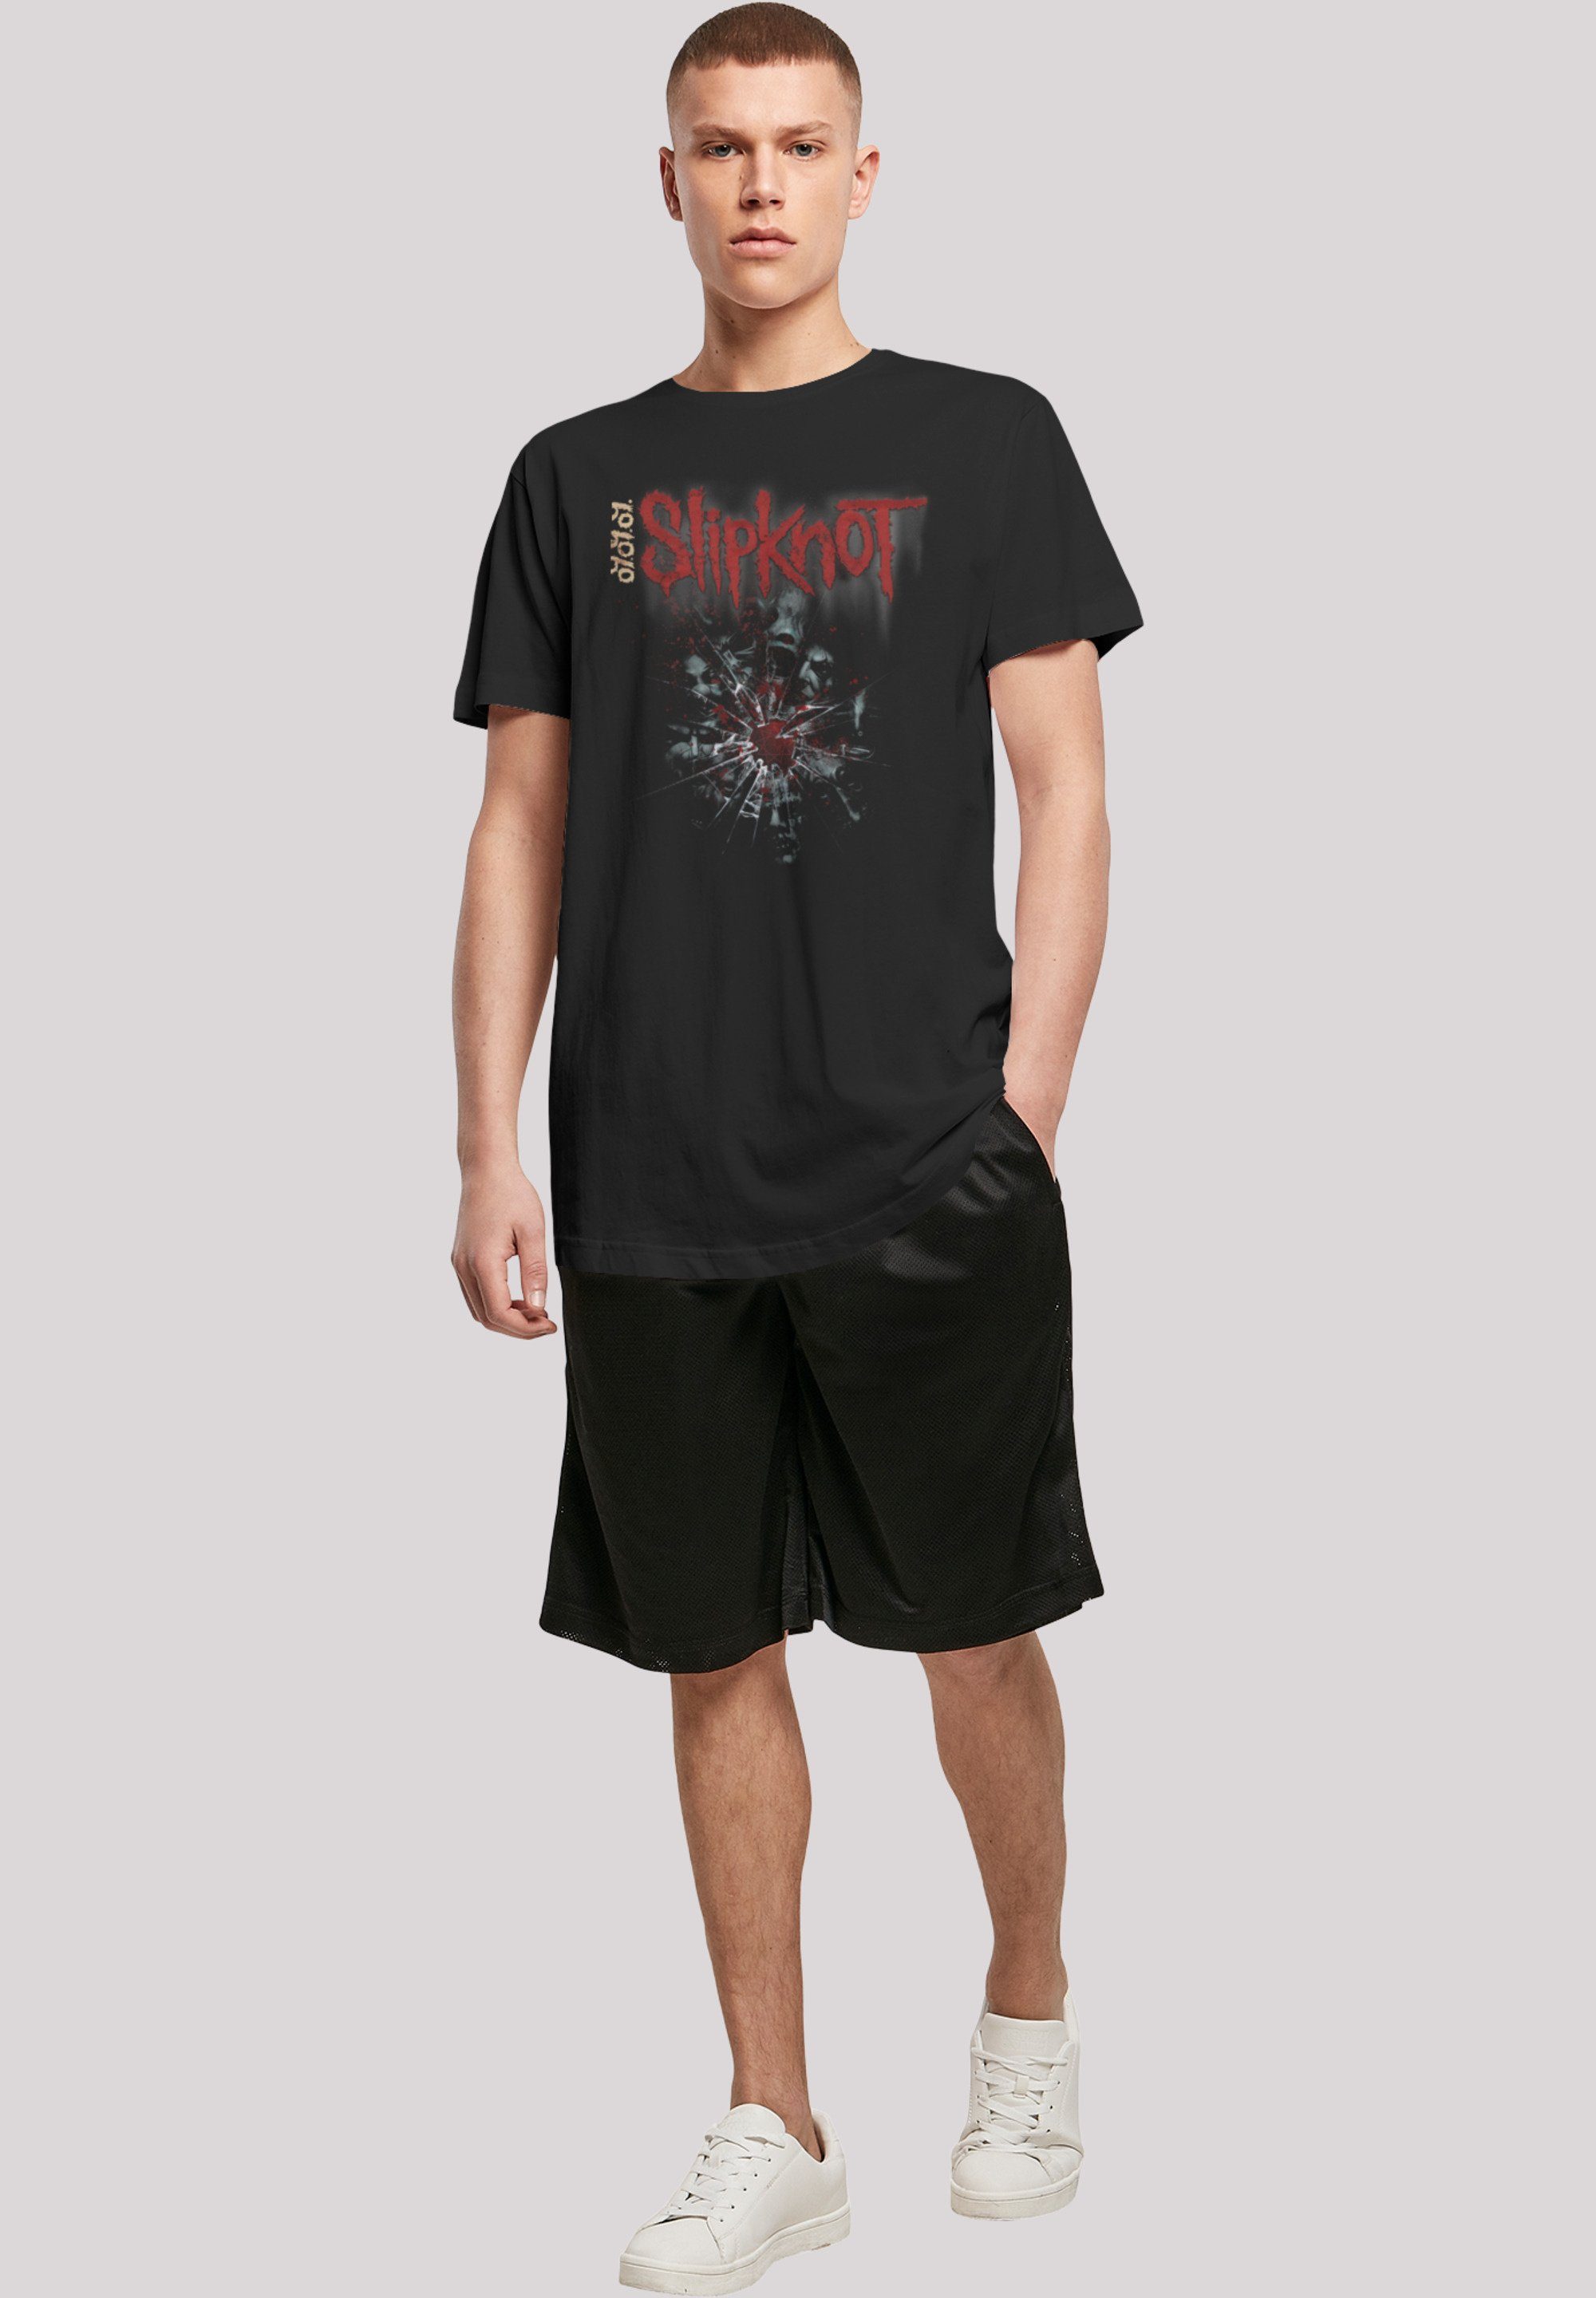 F4NT4STIC T-Shirt Slipknot Metal Band Print